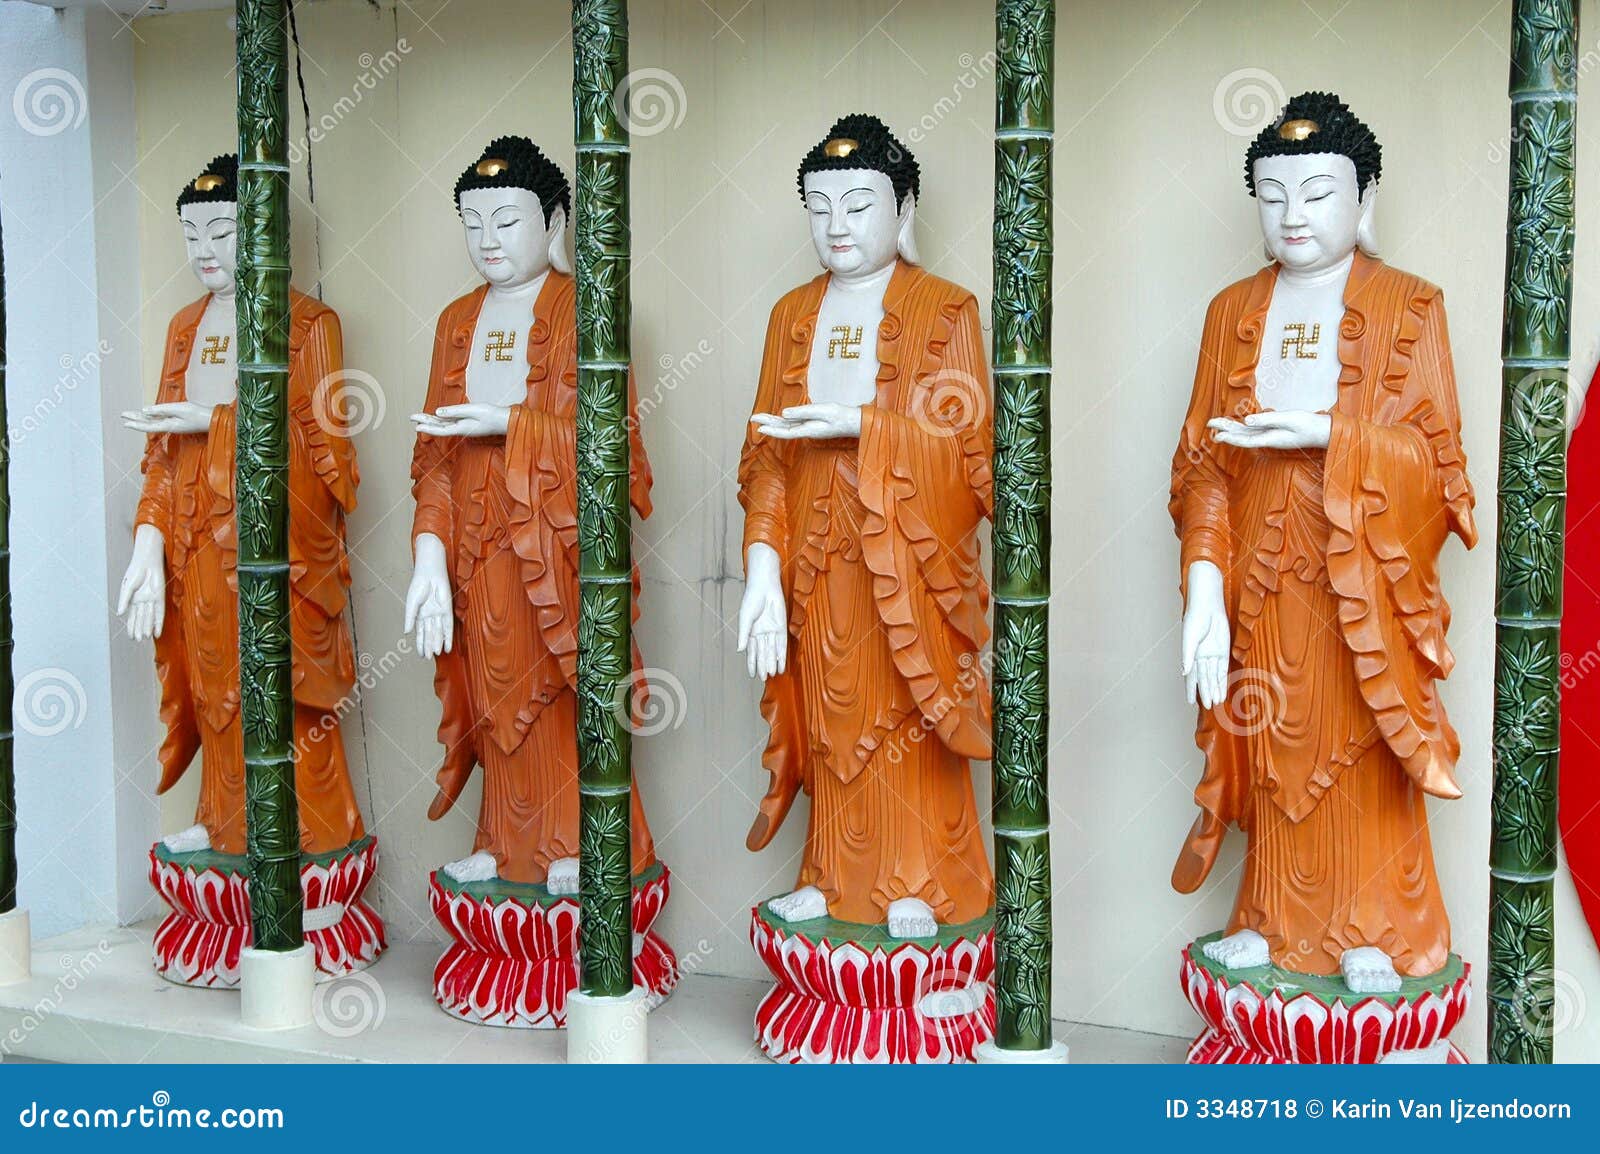 buddhas in a row